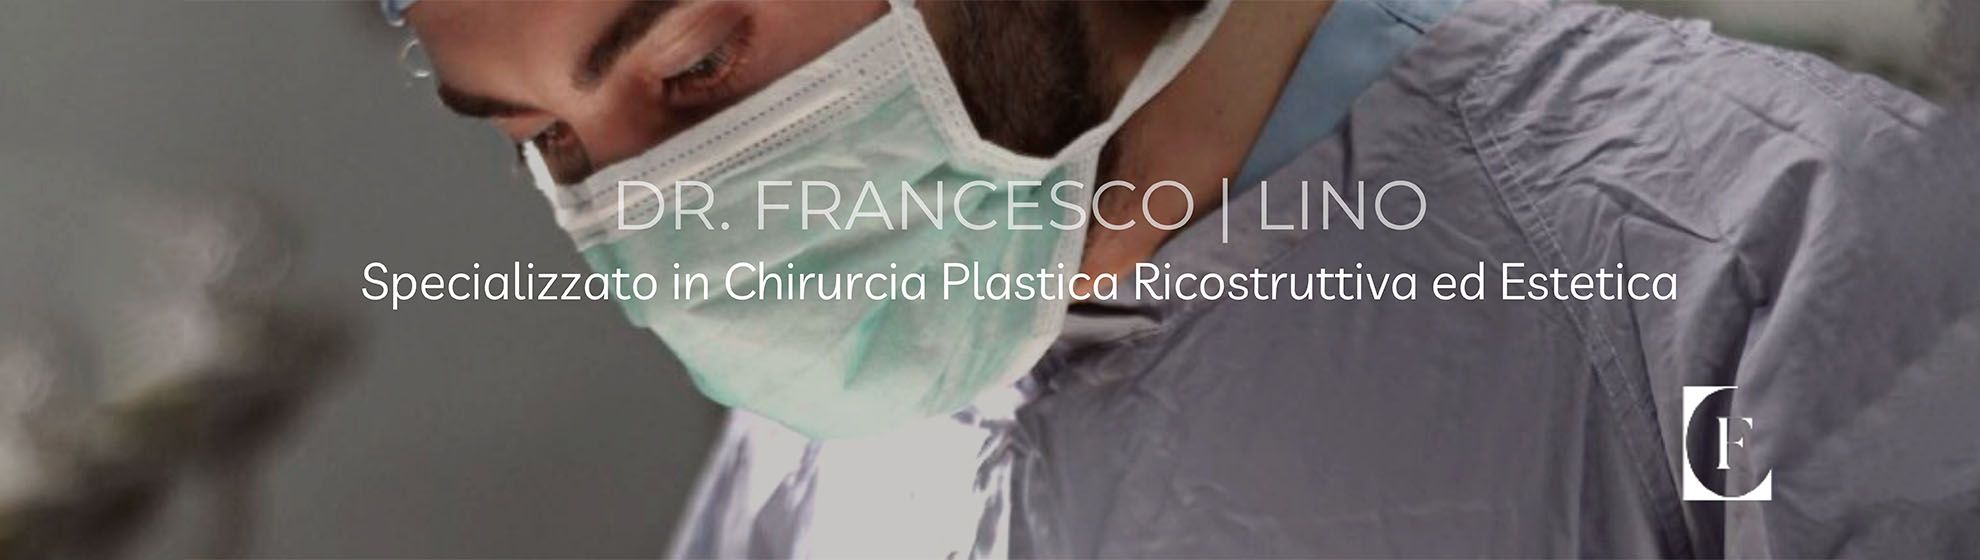 Dott. Francesco Lino